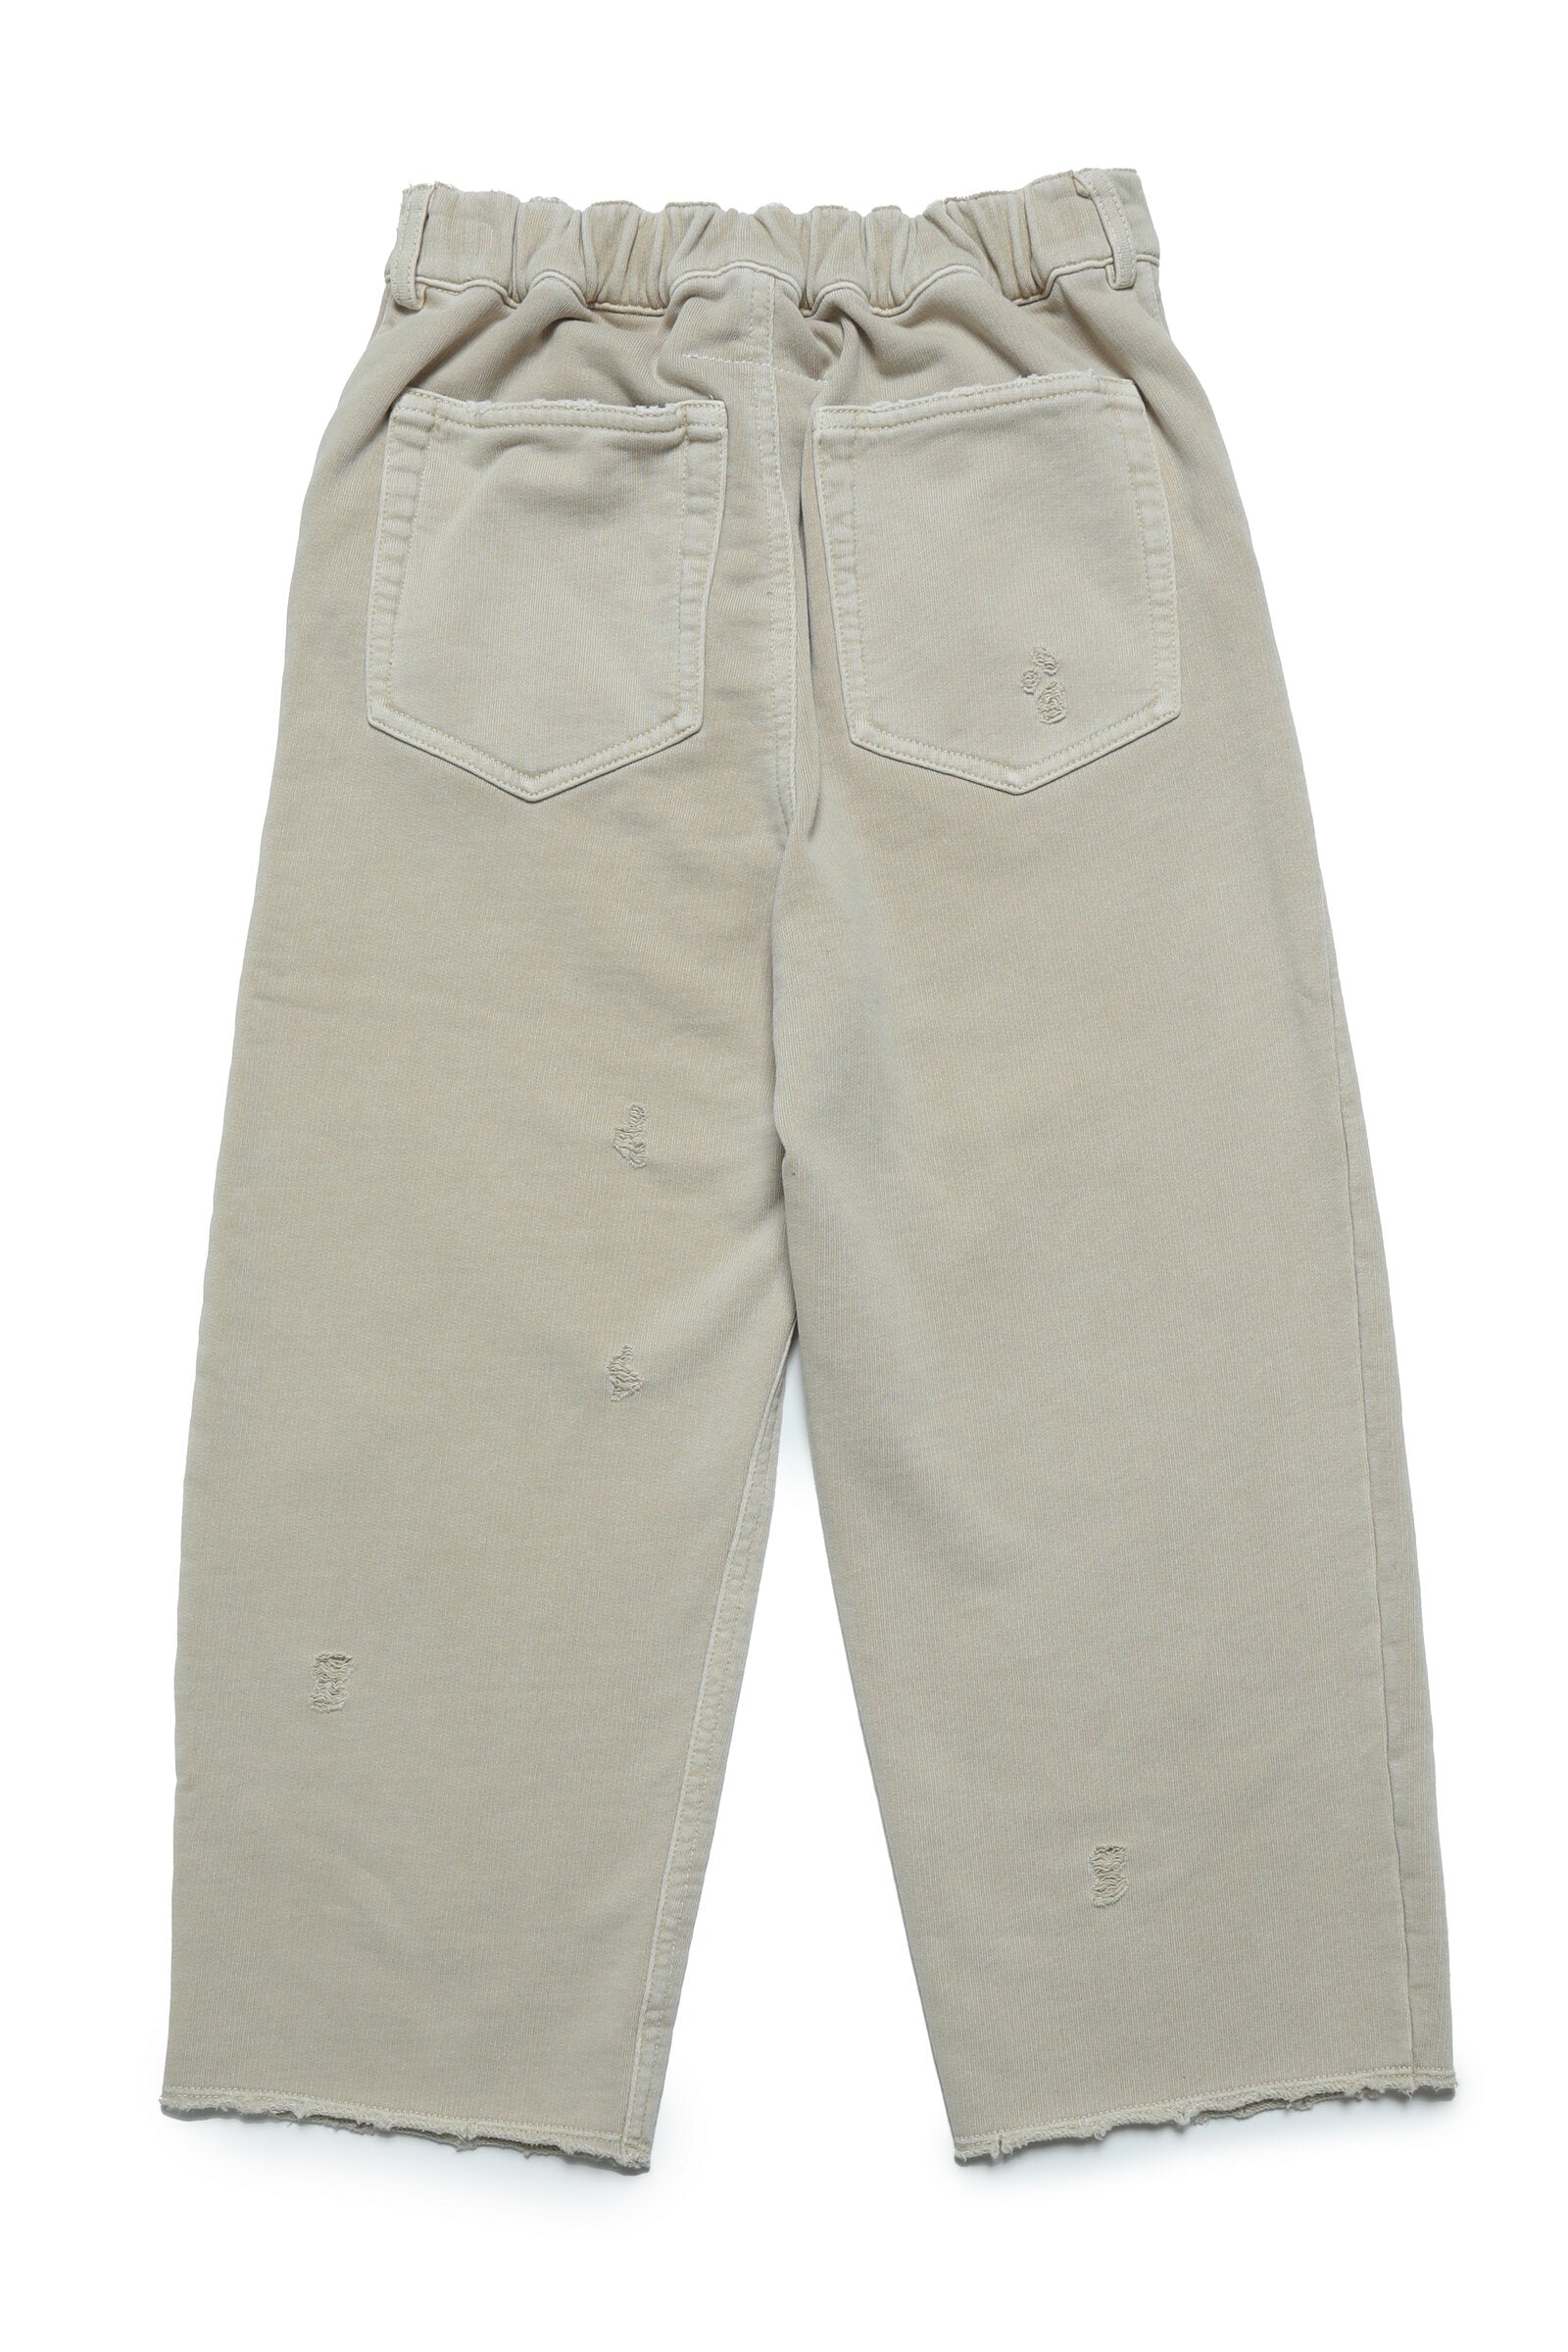 Five-pocket pants in fleece with vintage effect breaks